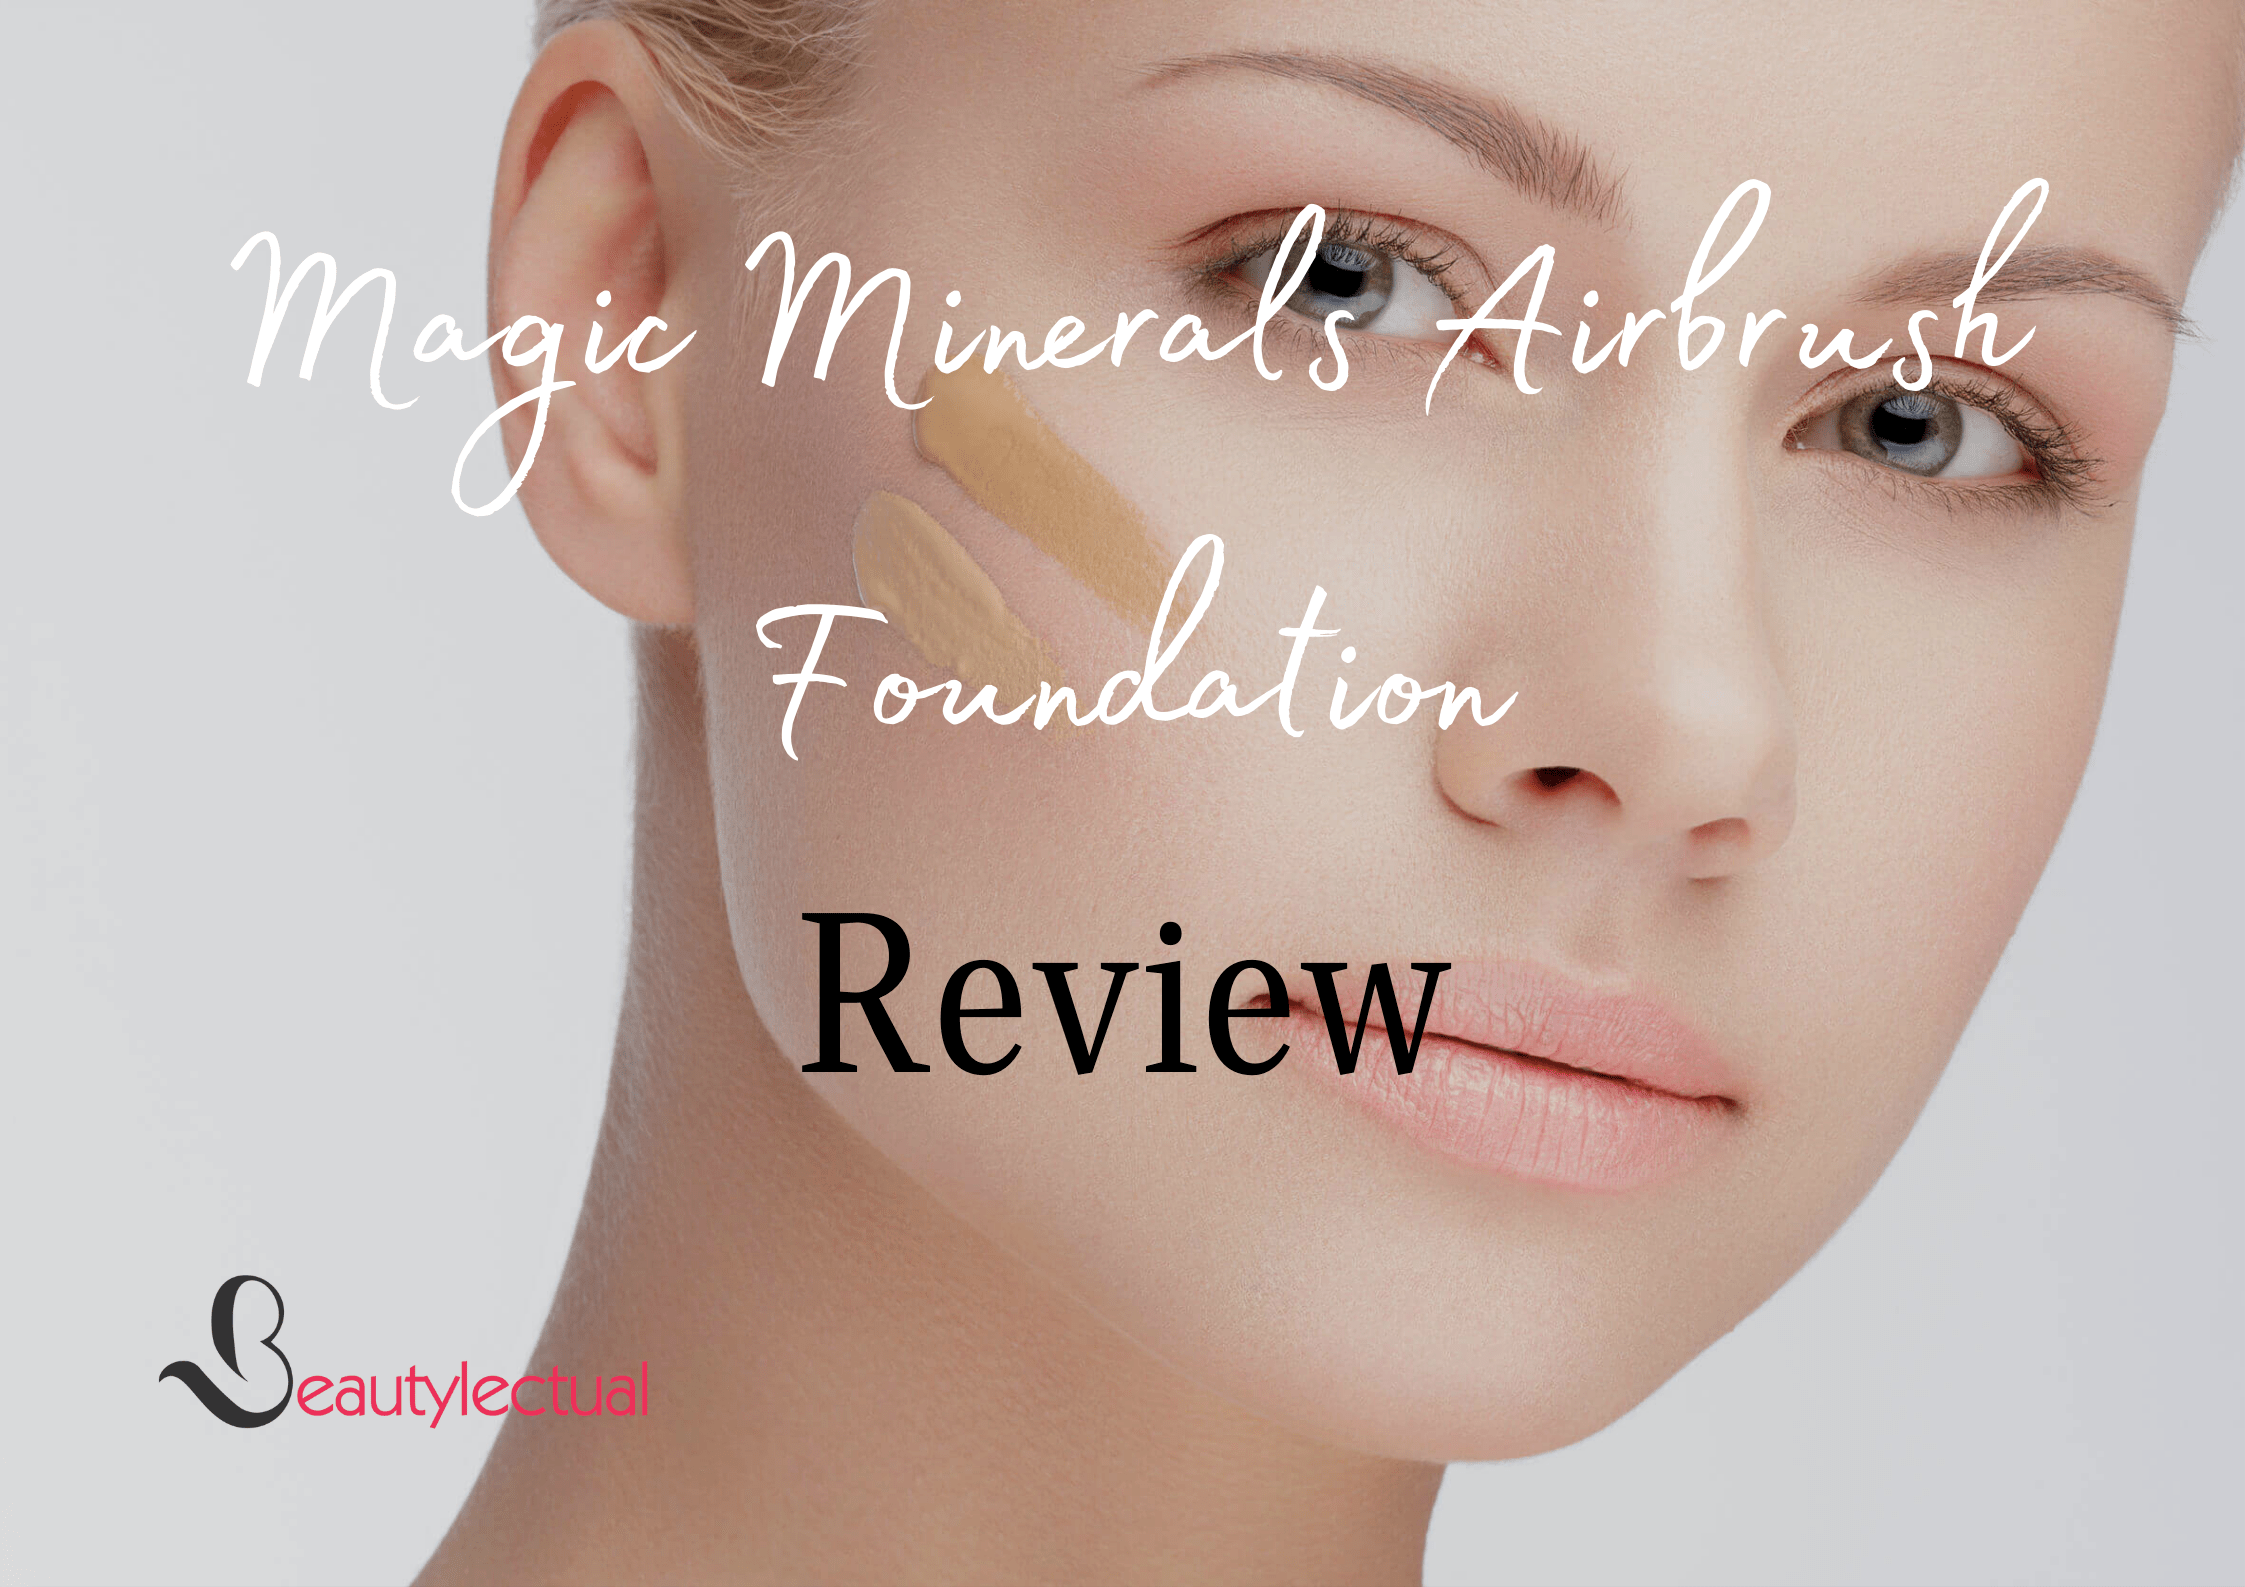 Magic Minerals Airbrush Foundation Reviews